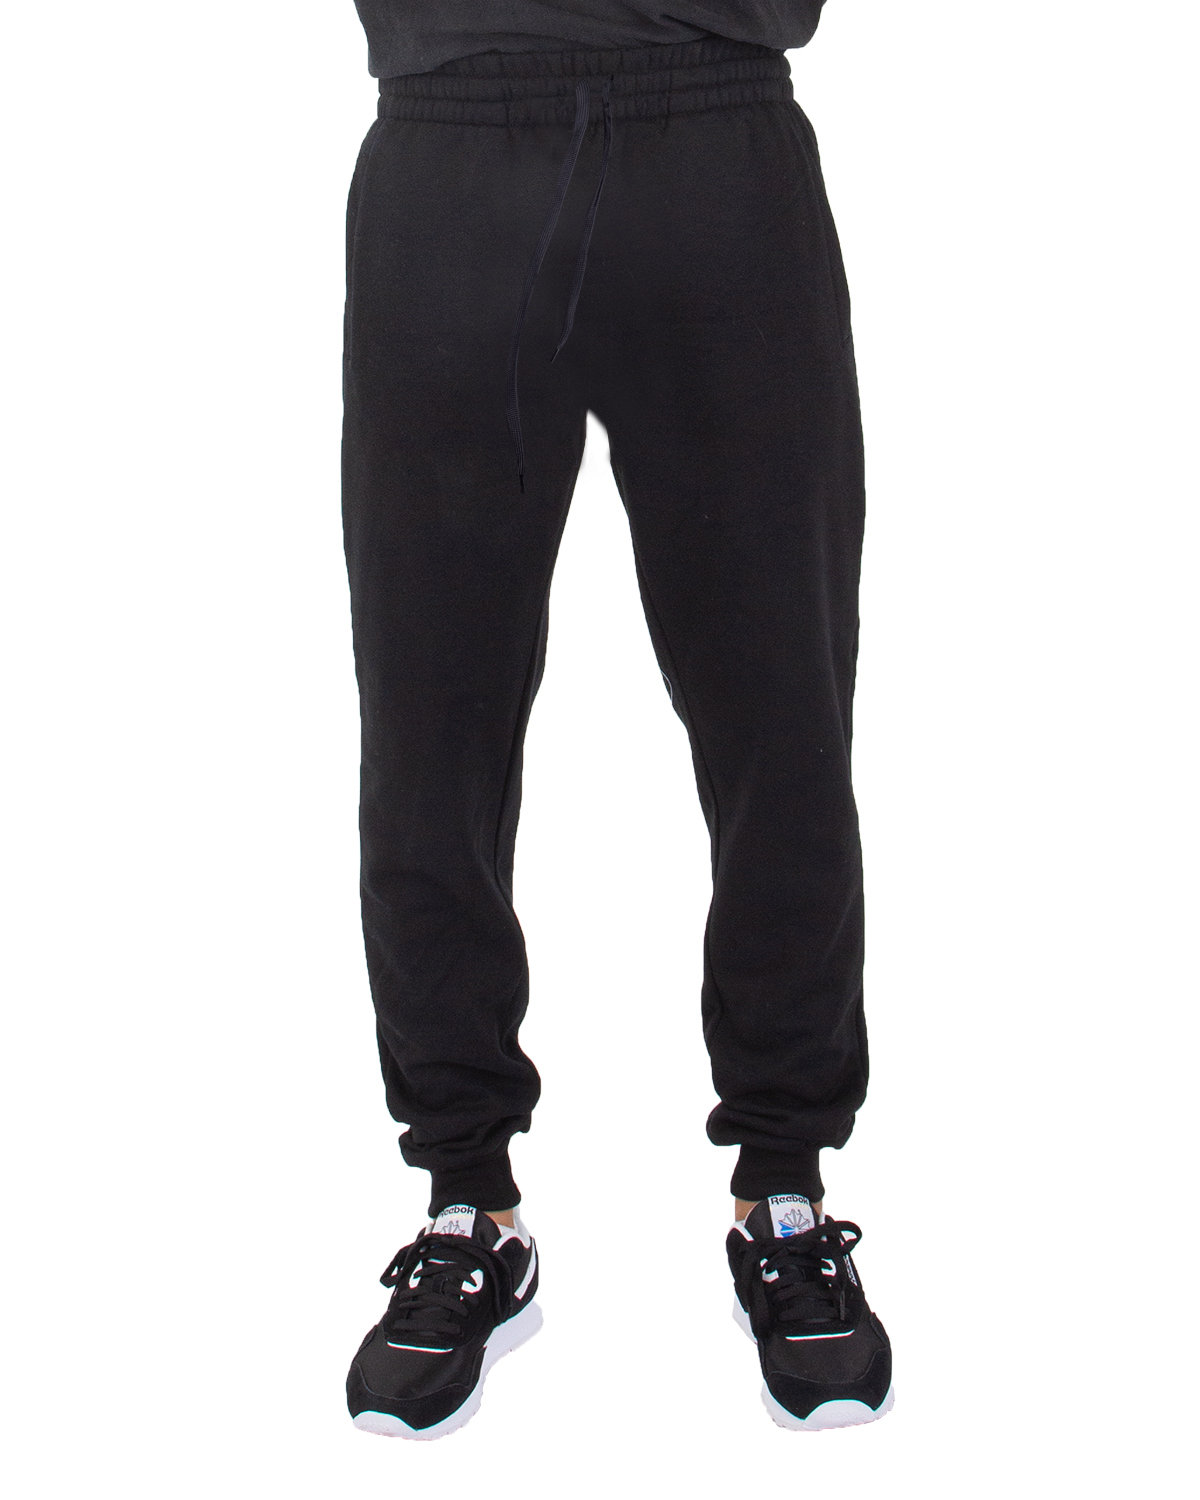 Shaka Wear Mens Mesh Basketball Shorts Athletic Pants S ~ 5XL BM17 Men ...